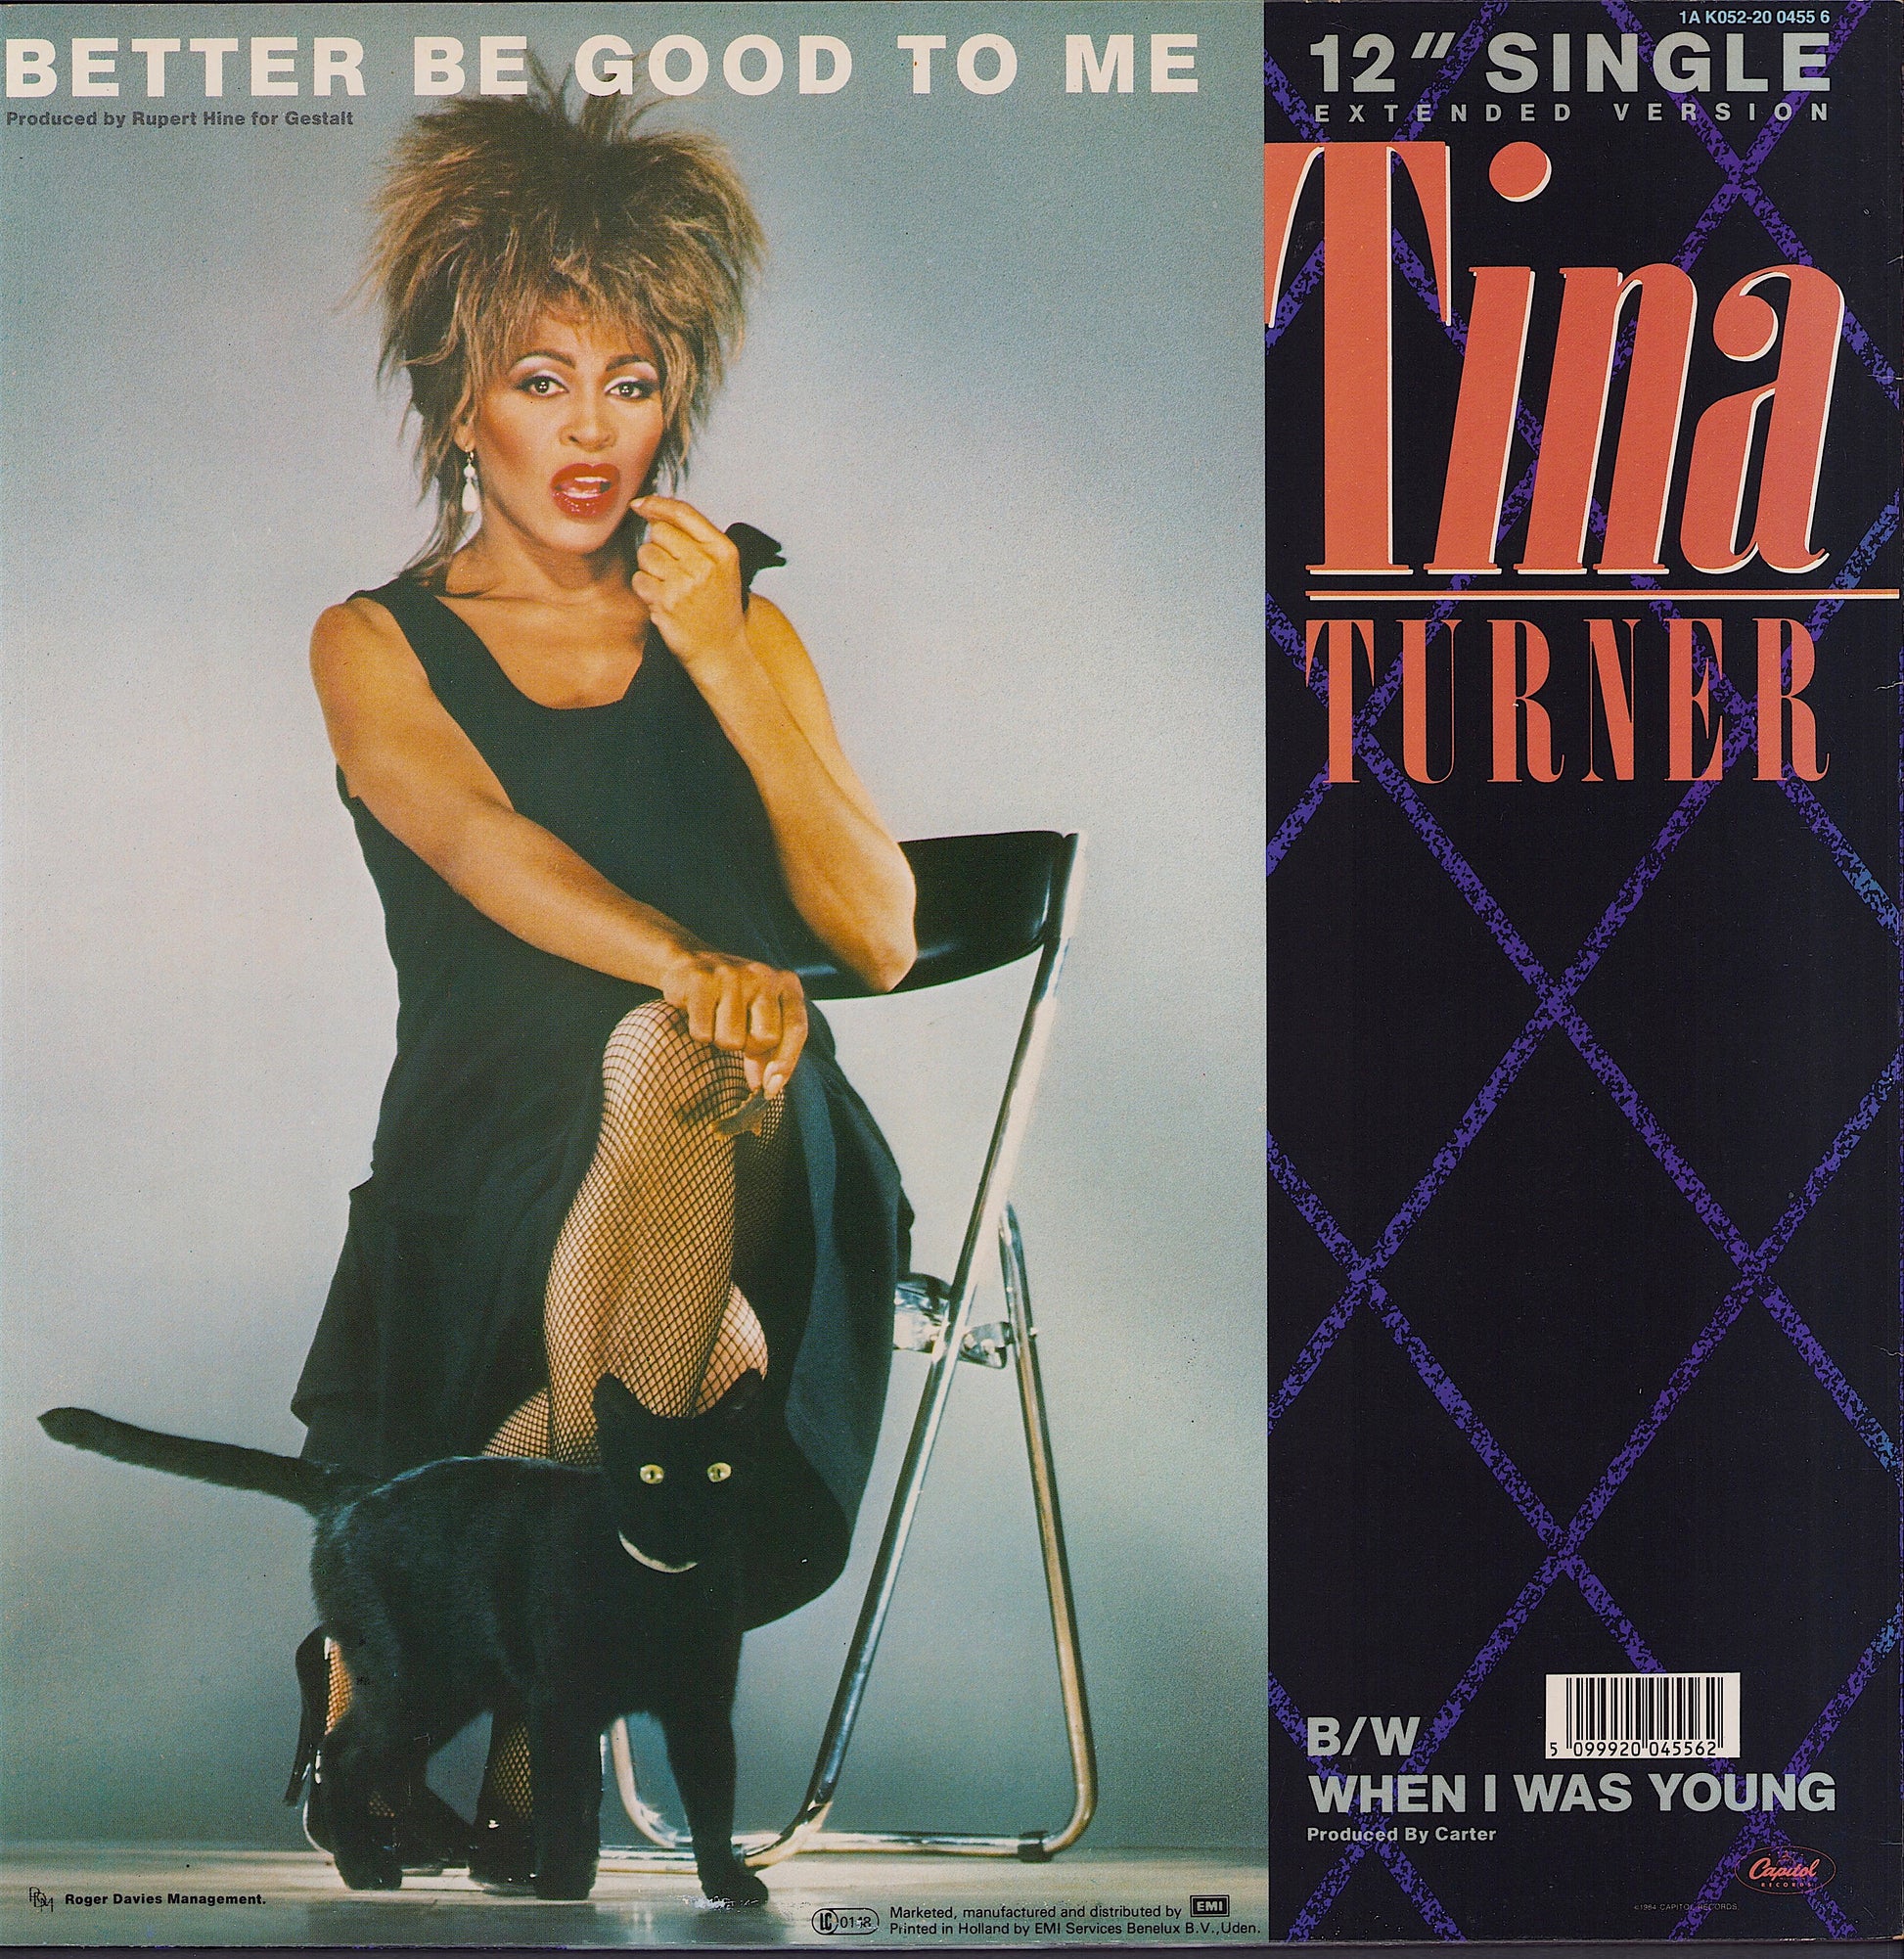 Tina Turner - Better Be Good To Me Extended Version Vinyl 12"